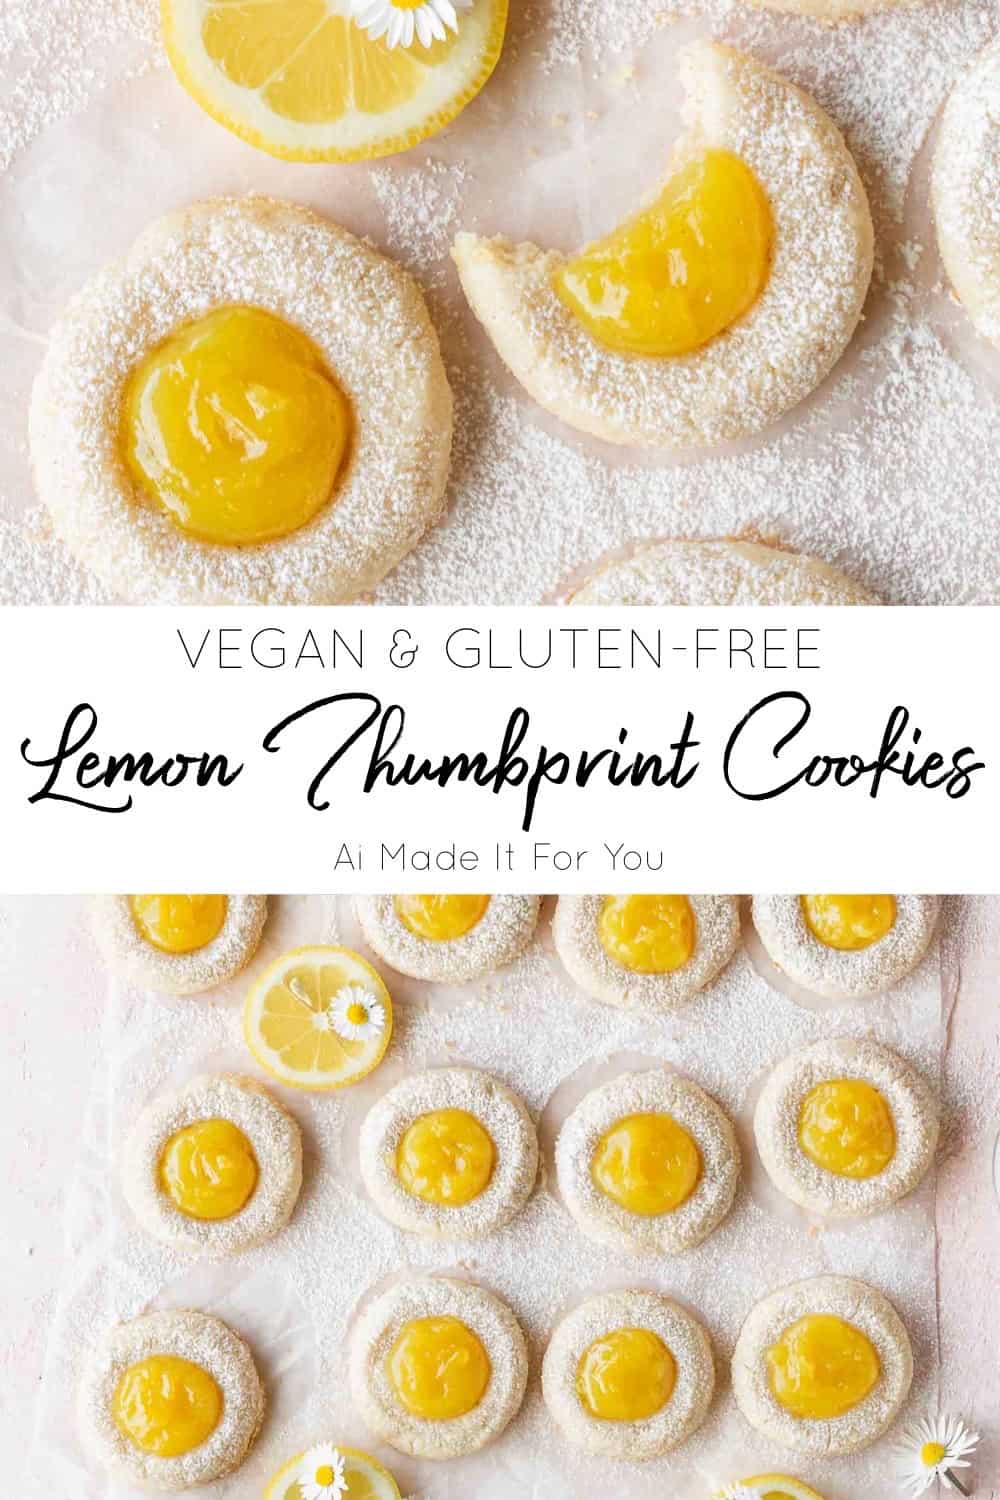 Lemon thumbprint cookies